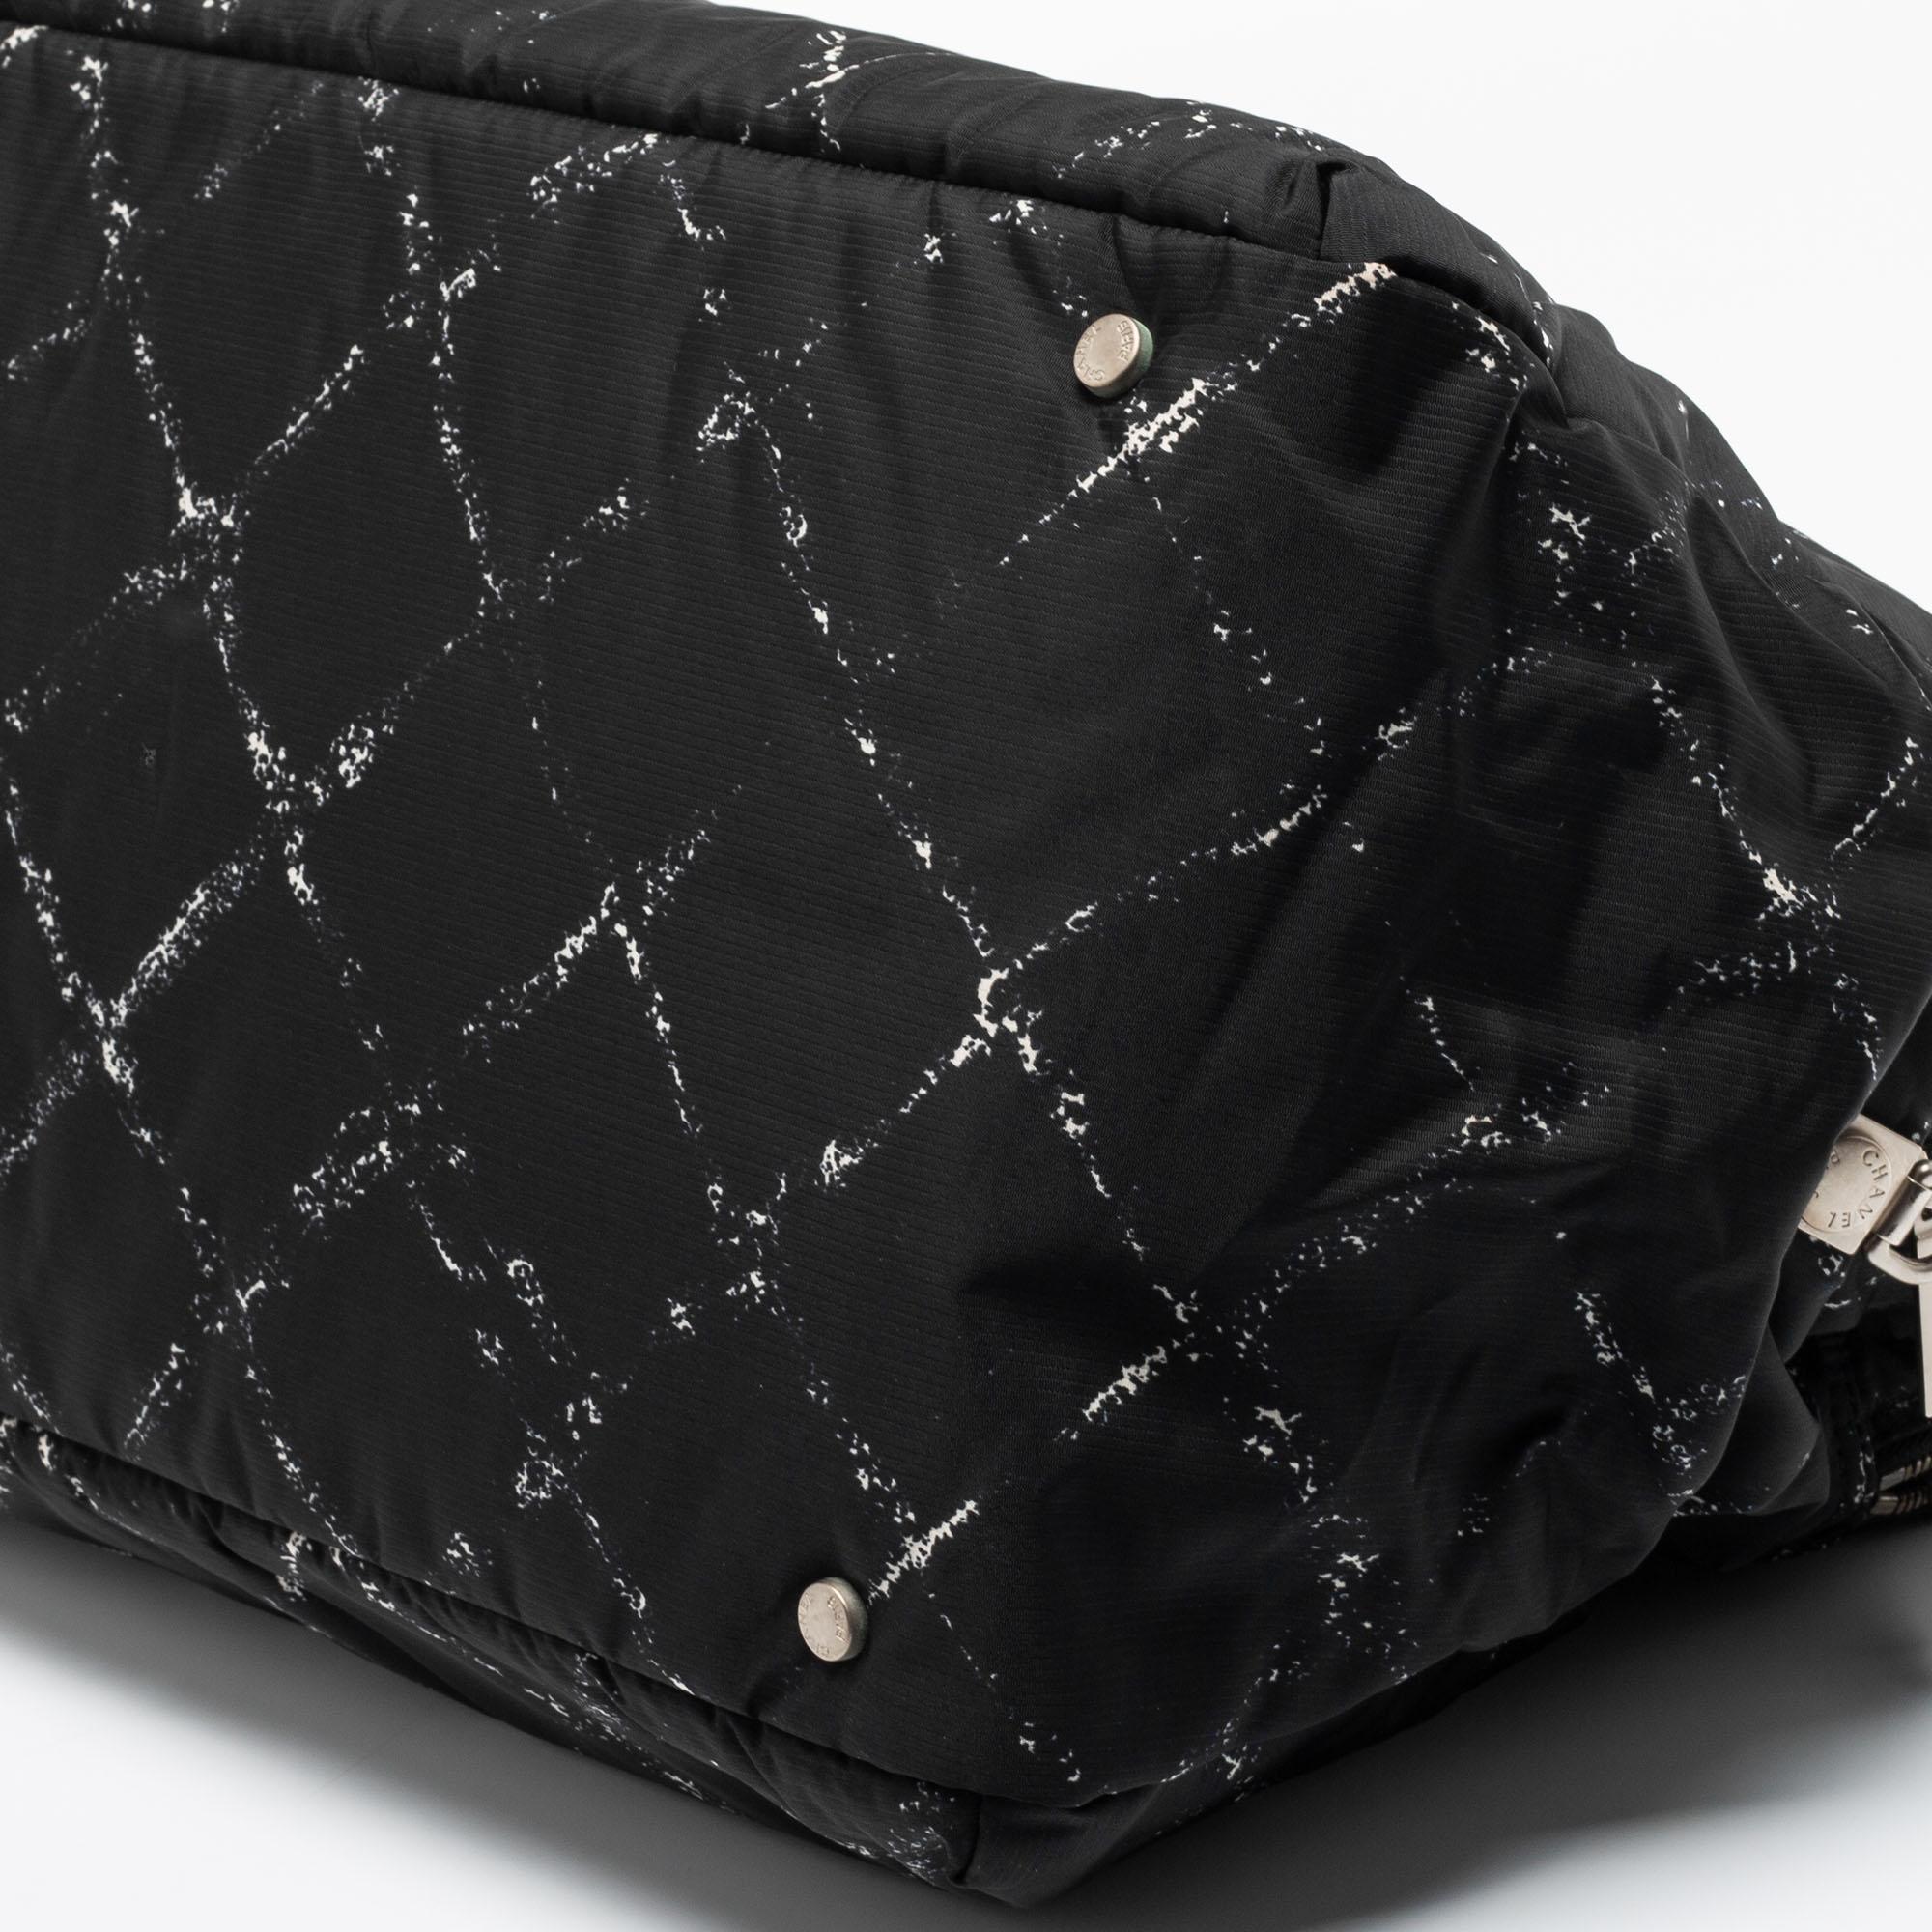 Chanel Black/White Quilted Print Nylon Travel Line Duffel Bag 1